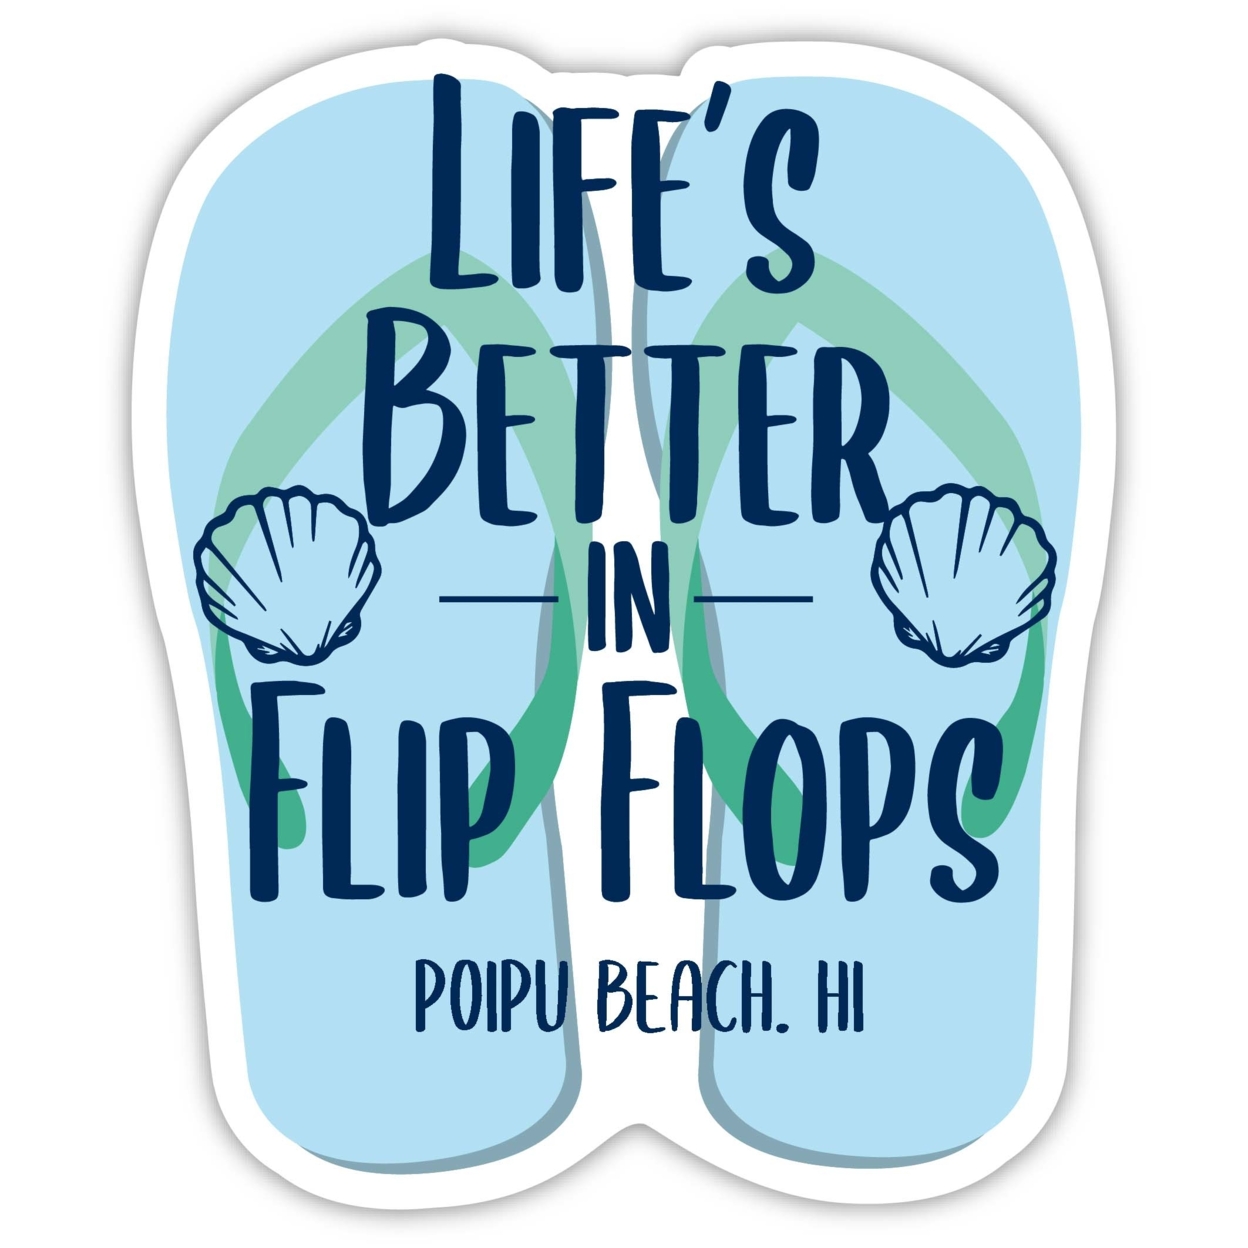 Poipu Beach Hawaii Souvenir 4 Inch Vinyl Decal Sticker Flip Flop Design